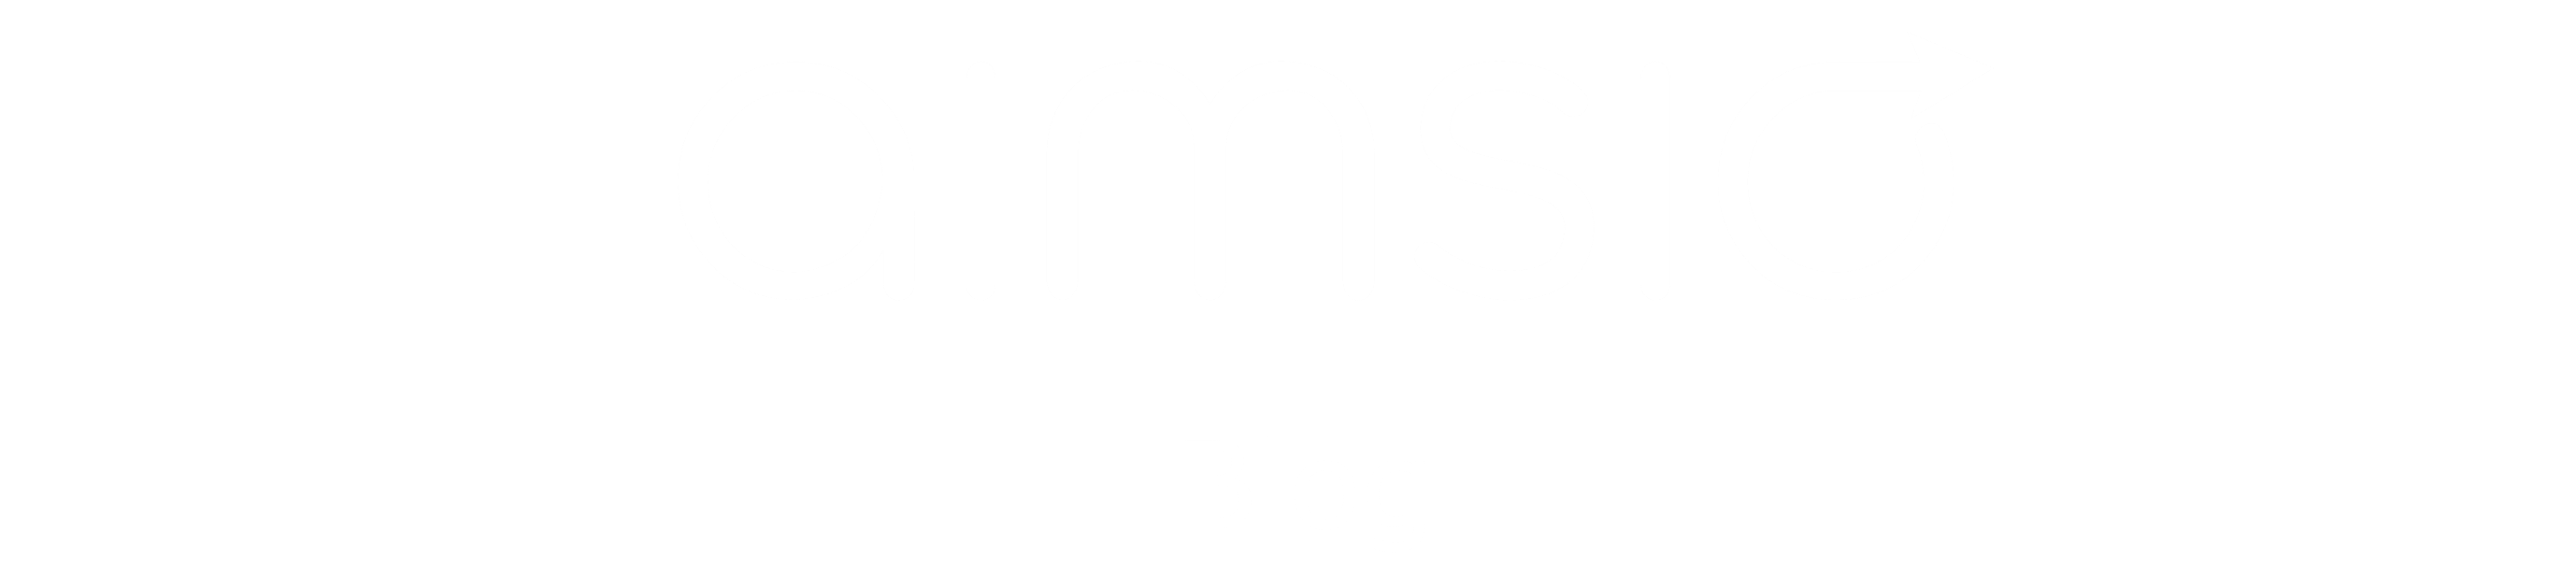 Aimsio blog logo.png